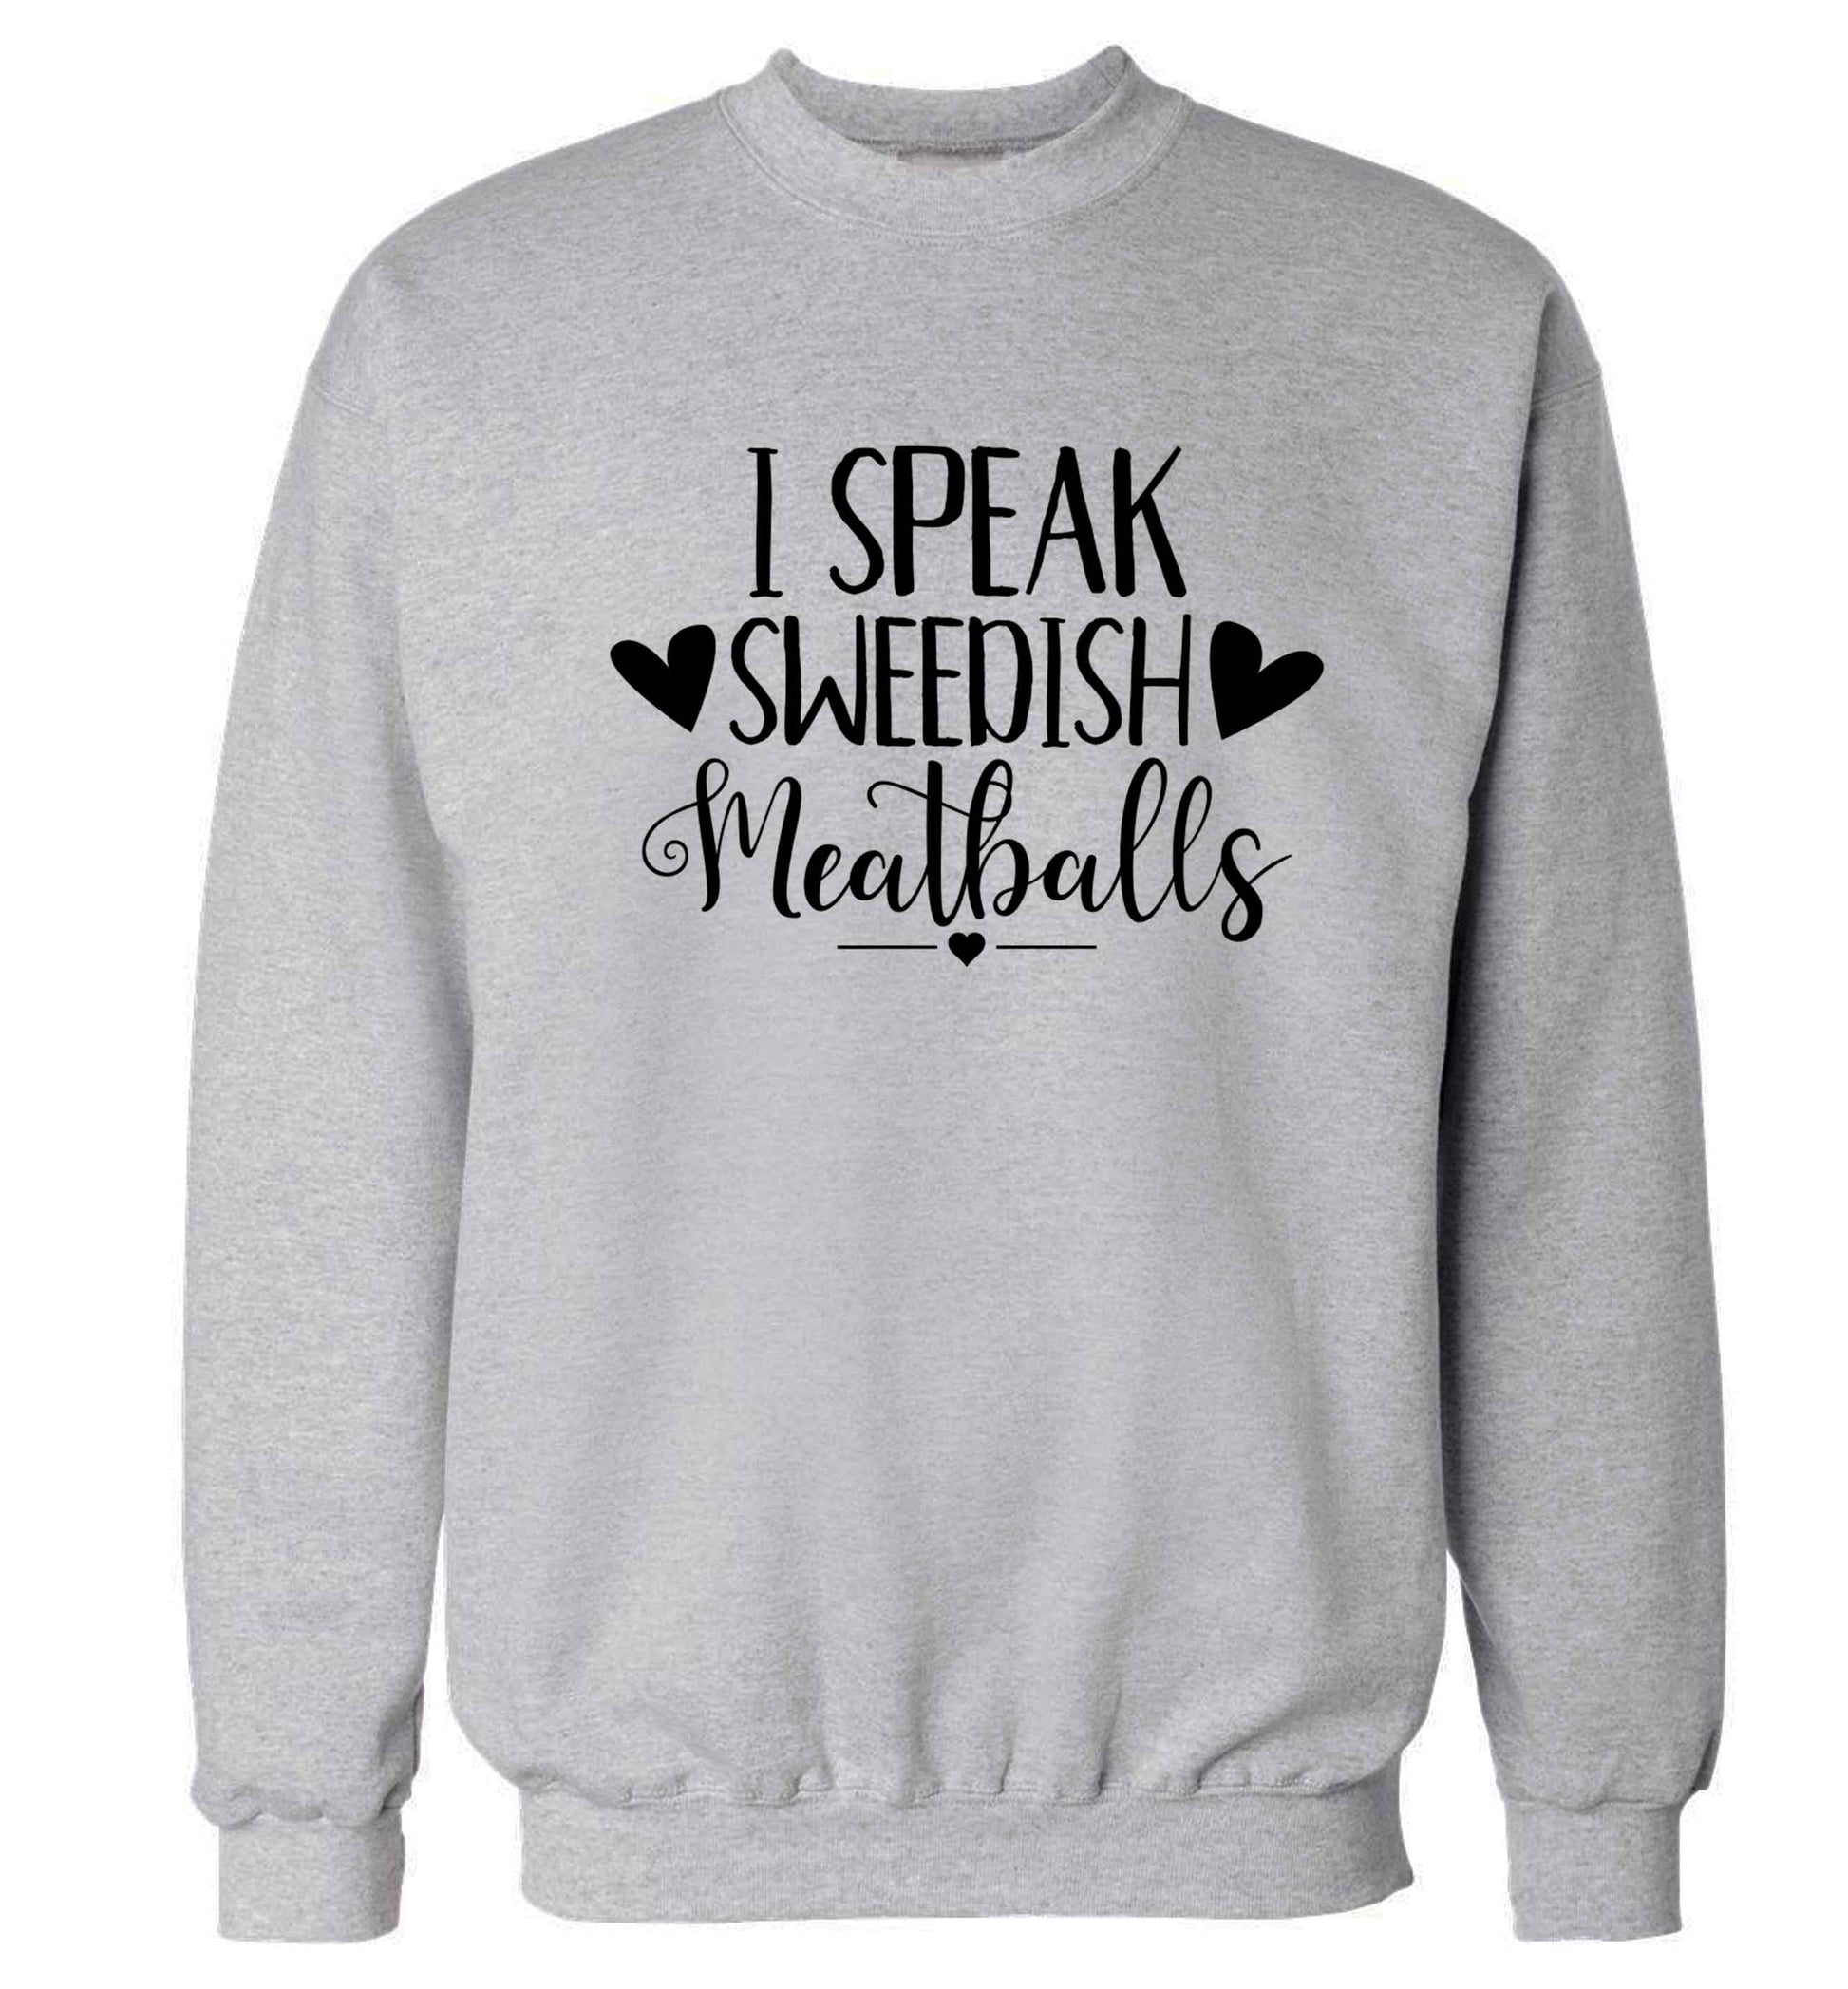 I speak sweedish...meatballs Adult's unisex grey Sweater 2XL